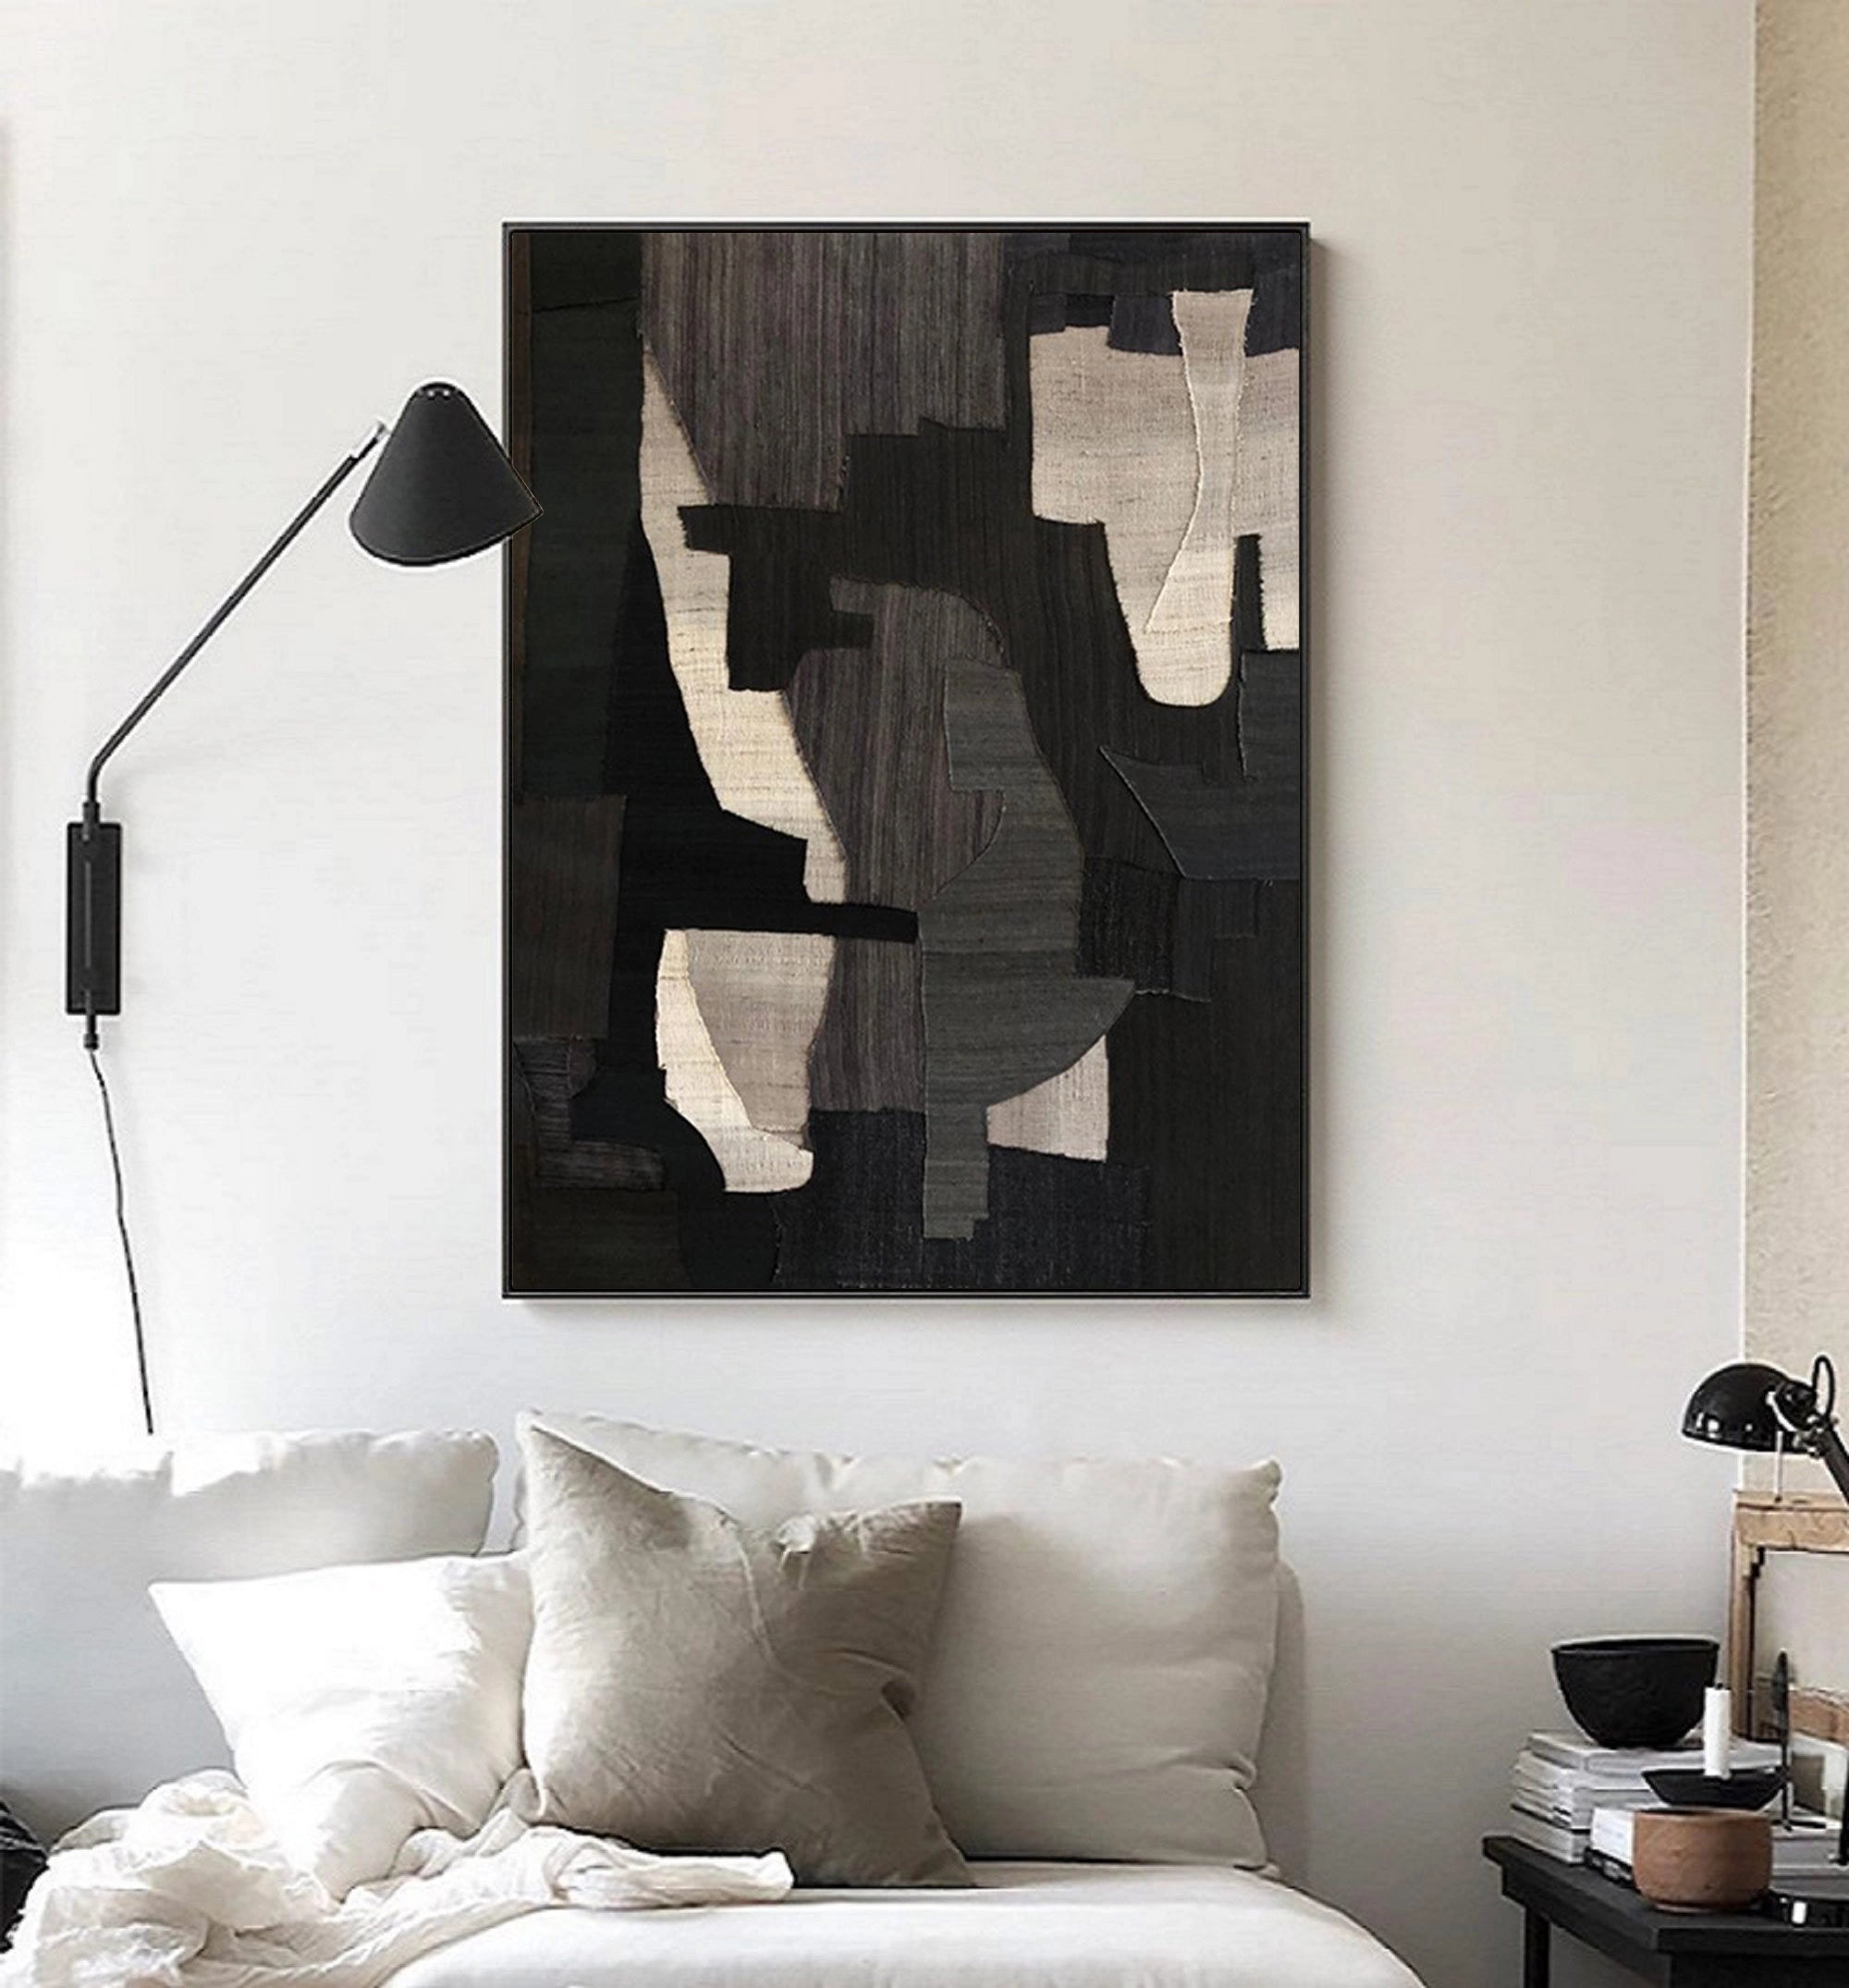 3D Textured Wabi Sabi Minimalist Wall Art Modern Abstract Painting On Canvas For Living Room/Bedroom